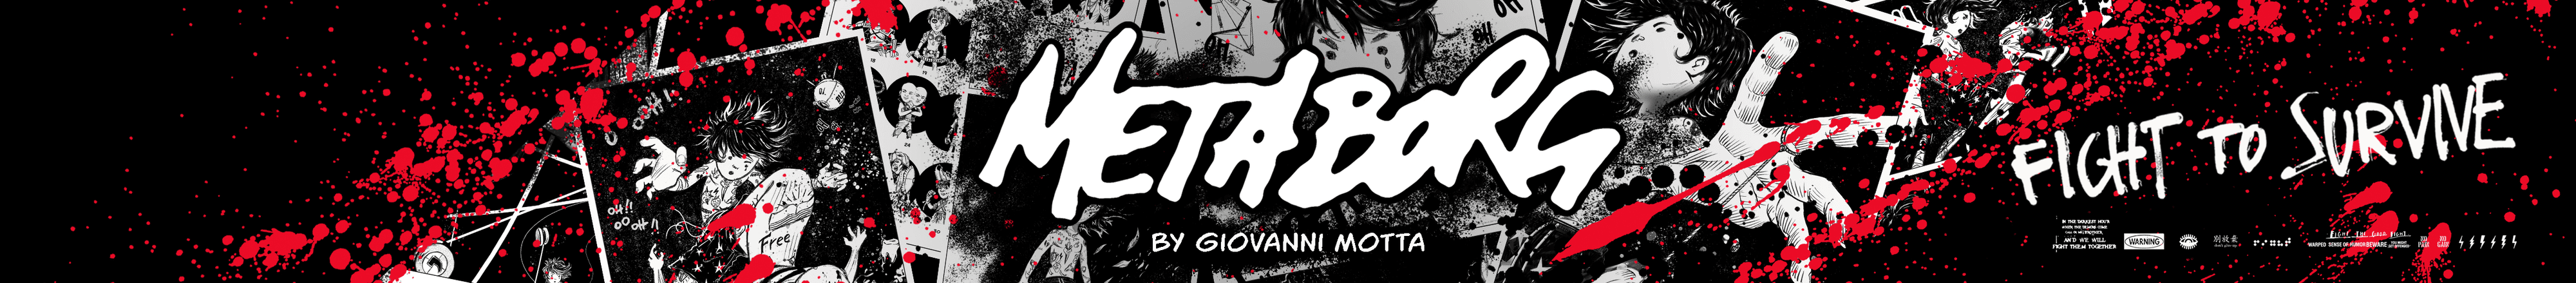 Metaborg Manga by Giovanni Motta